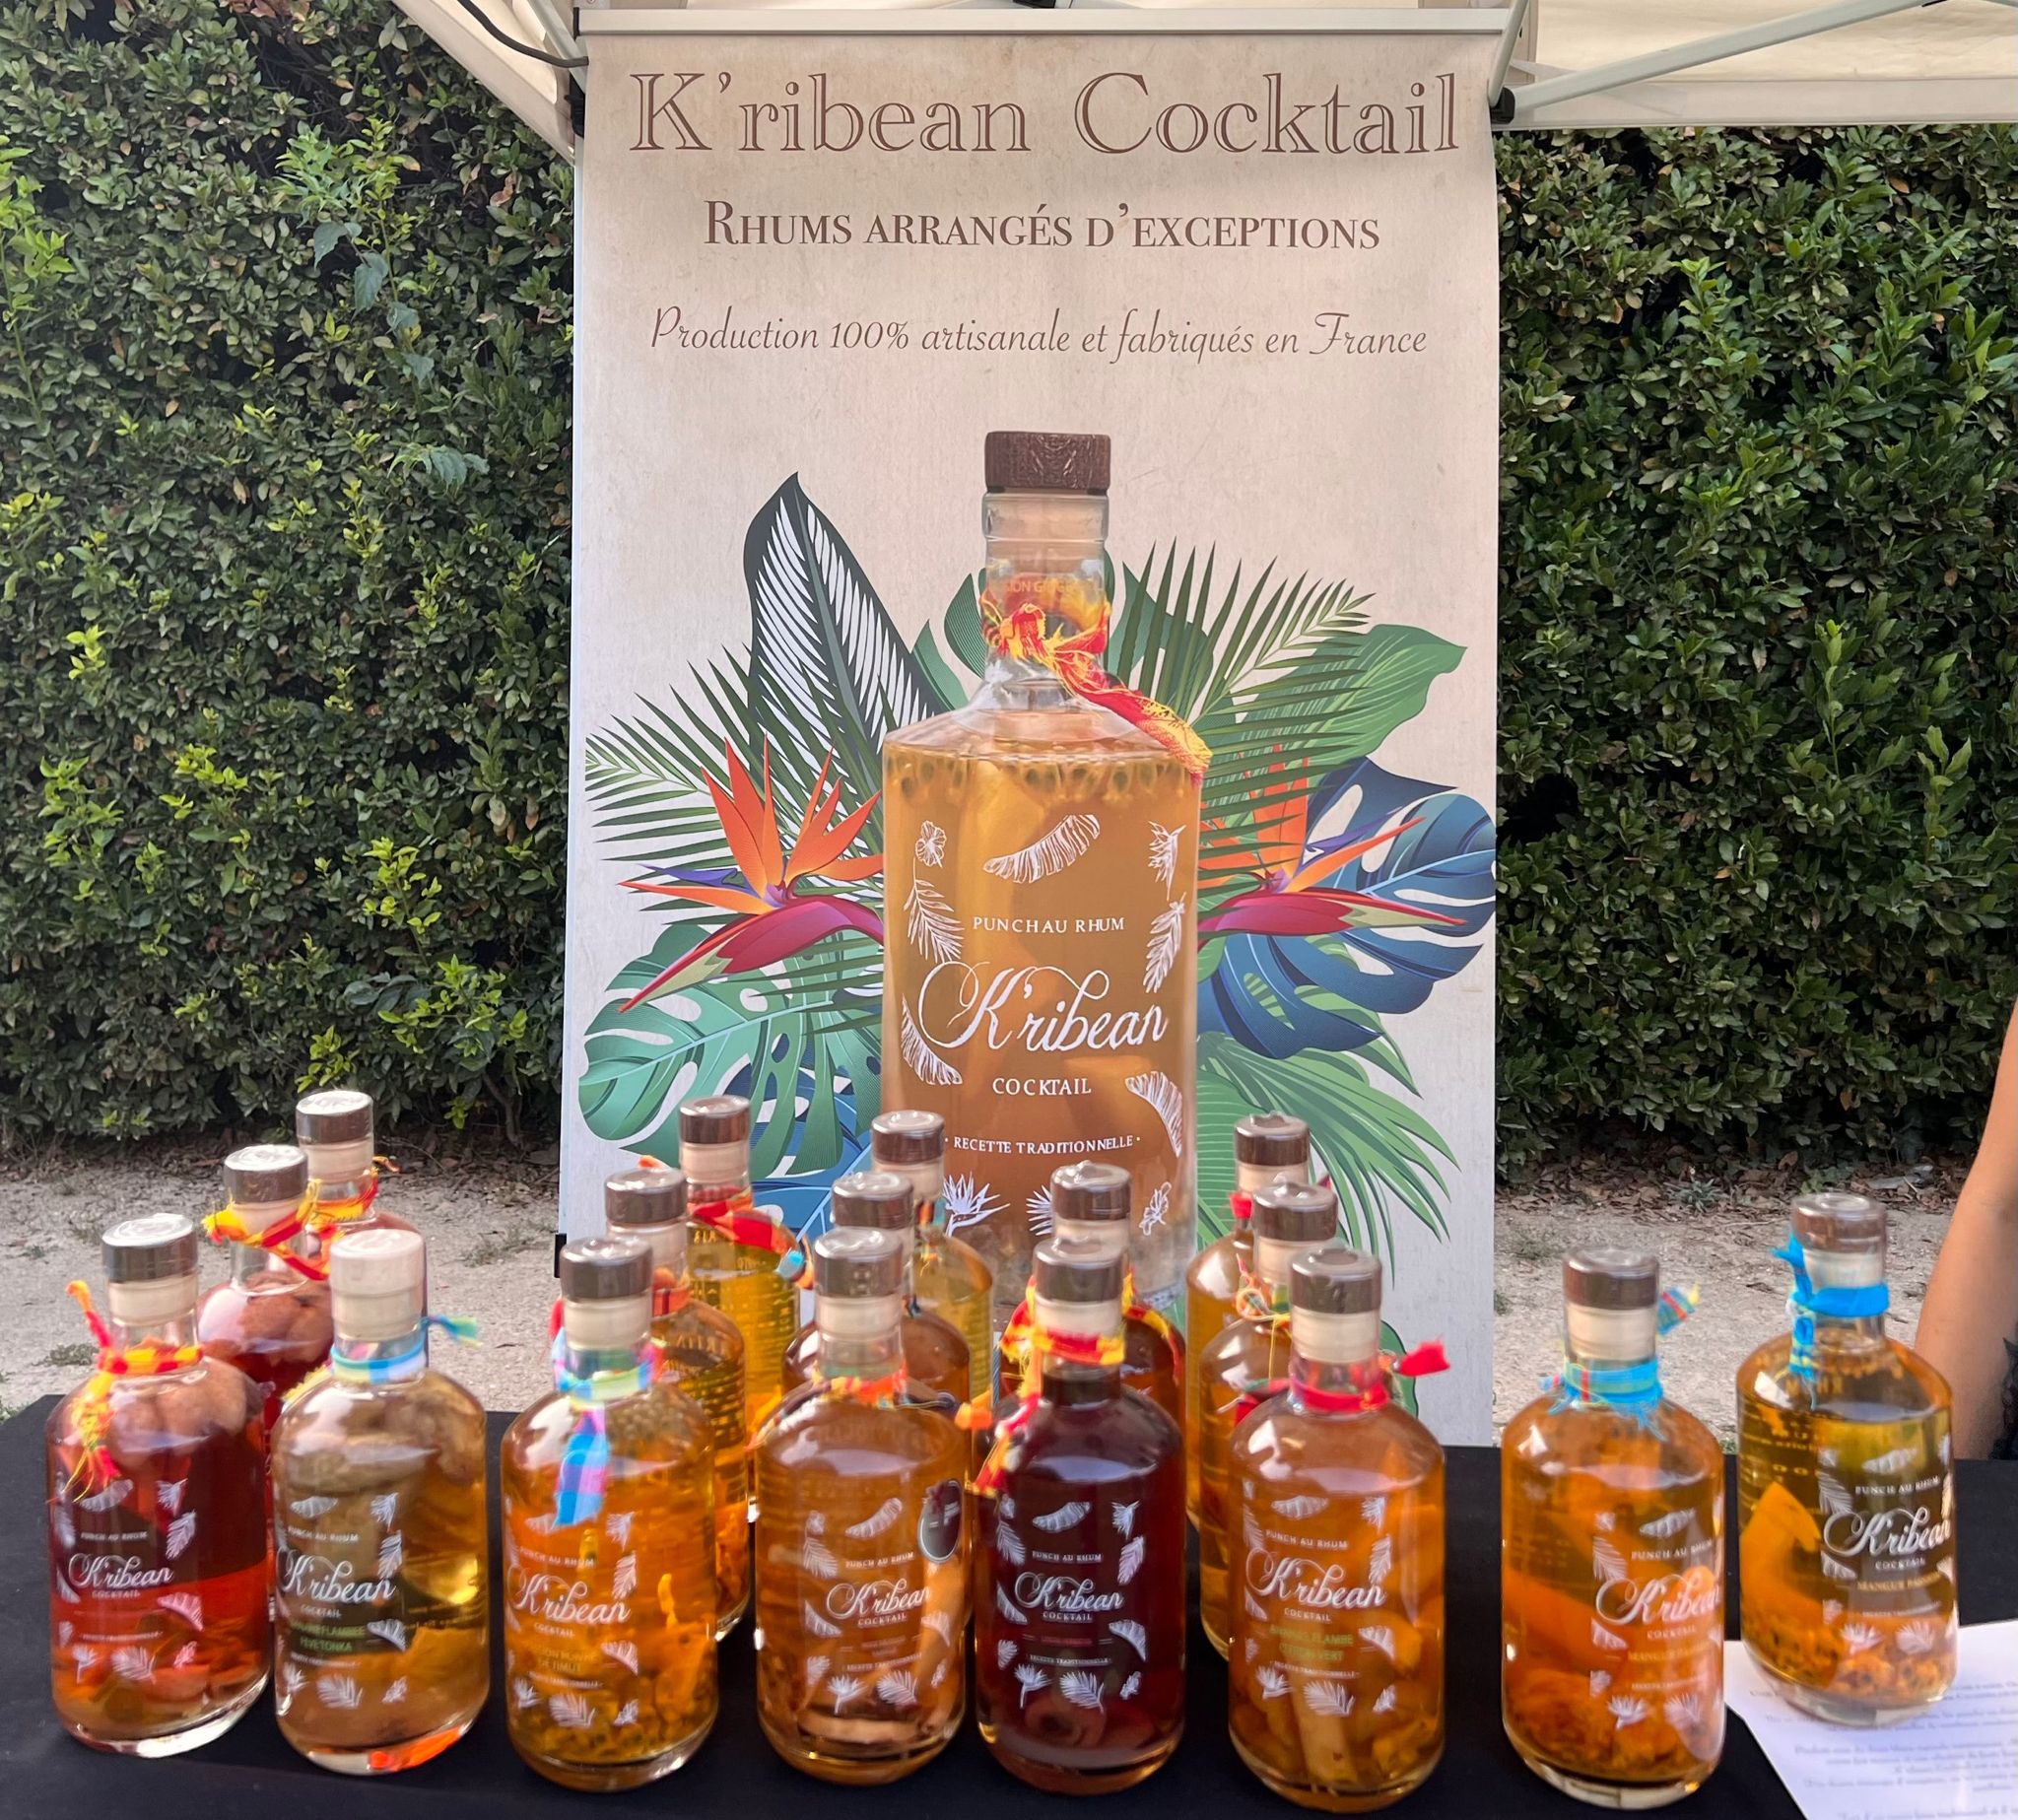 K'ribean Cocktail - Coffret Saveurs Exotiques & Tonka - Rhums Arrangés